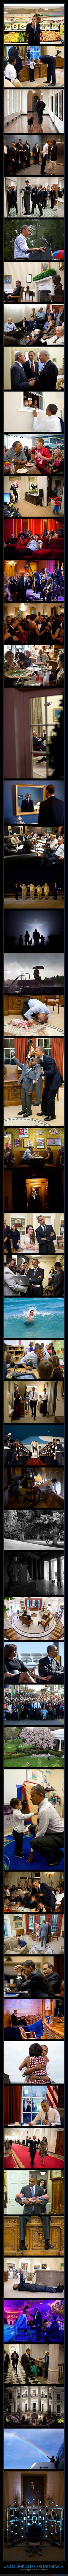 obama,fotos,presidente,casa blanca